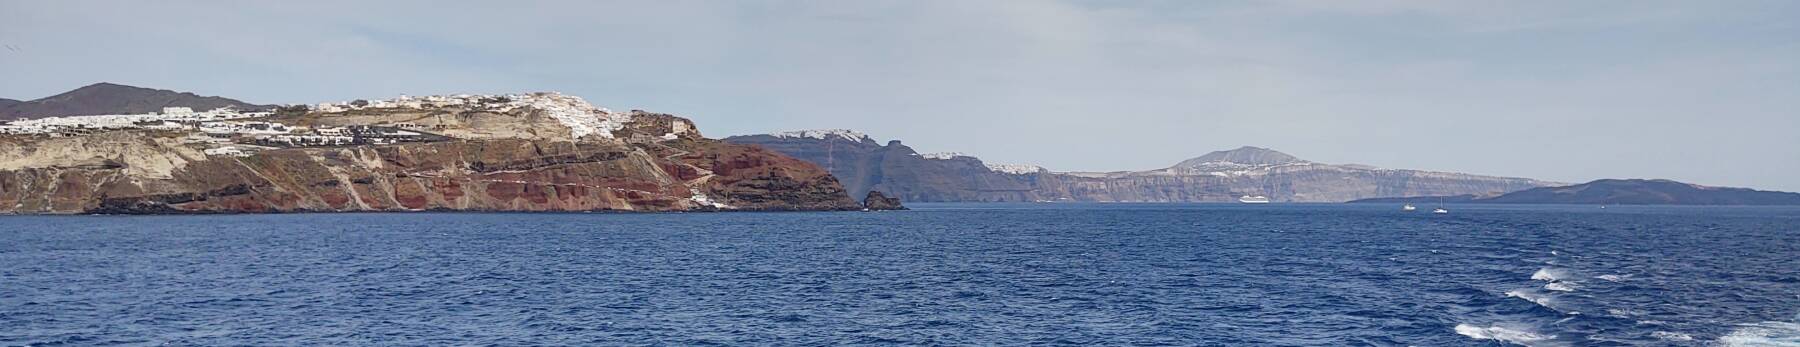 Leaving Thira (Santorini) port for Ios.